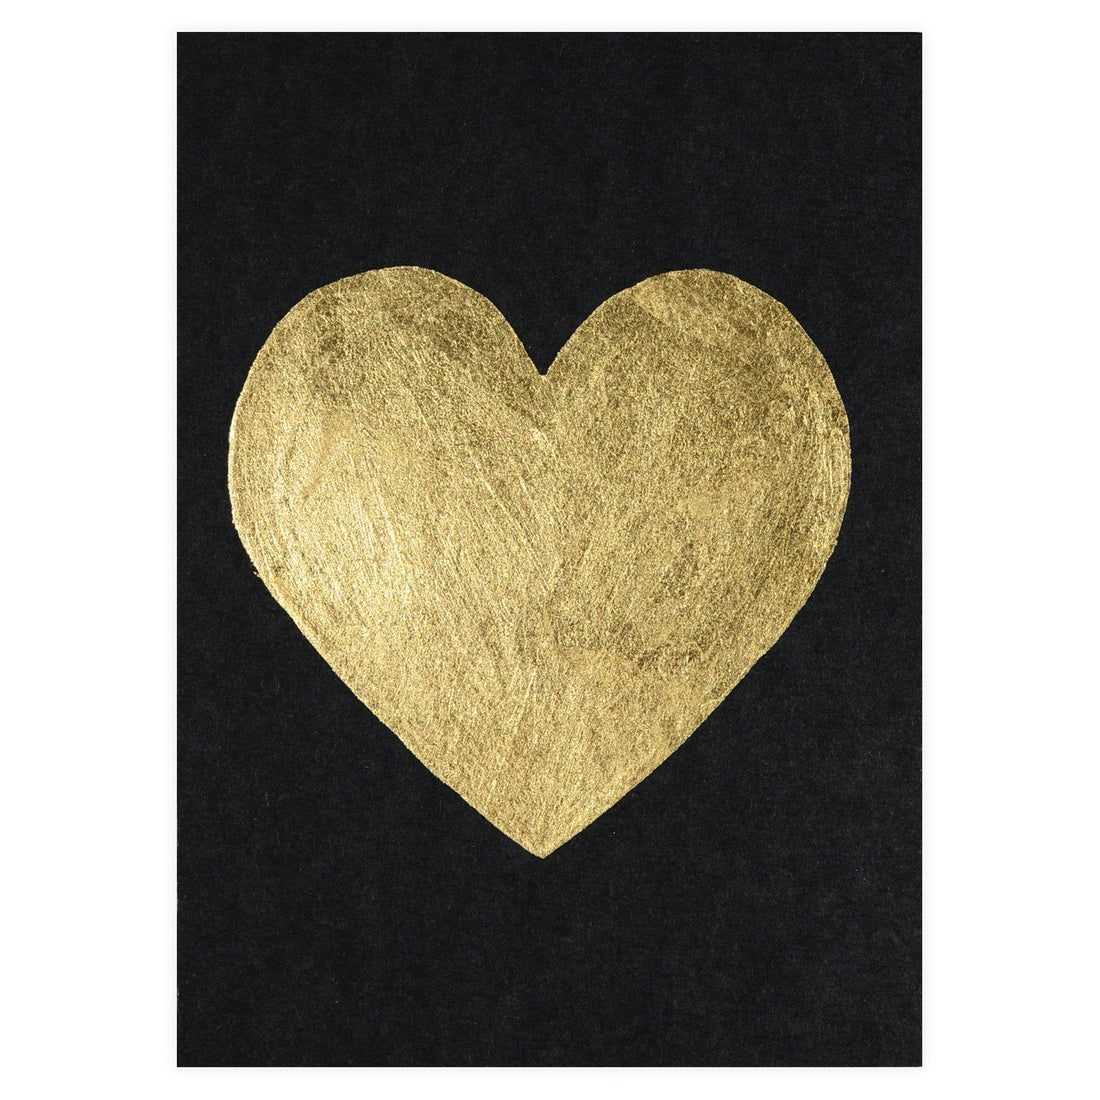 Catherine Greenup Heart Gold Leaf Greeting Card Black 